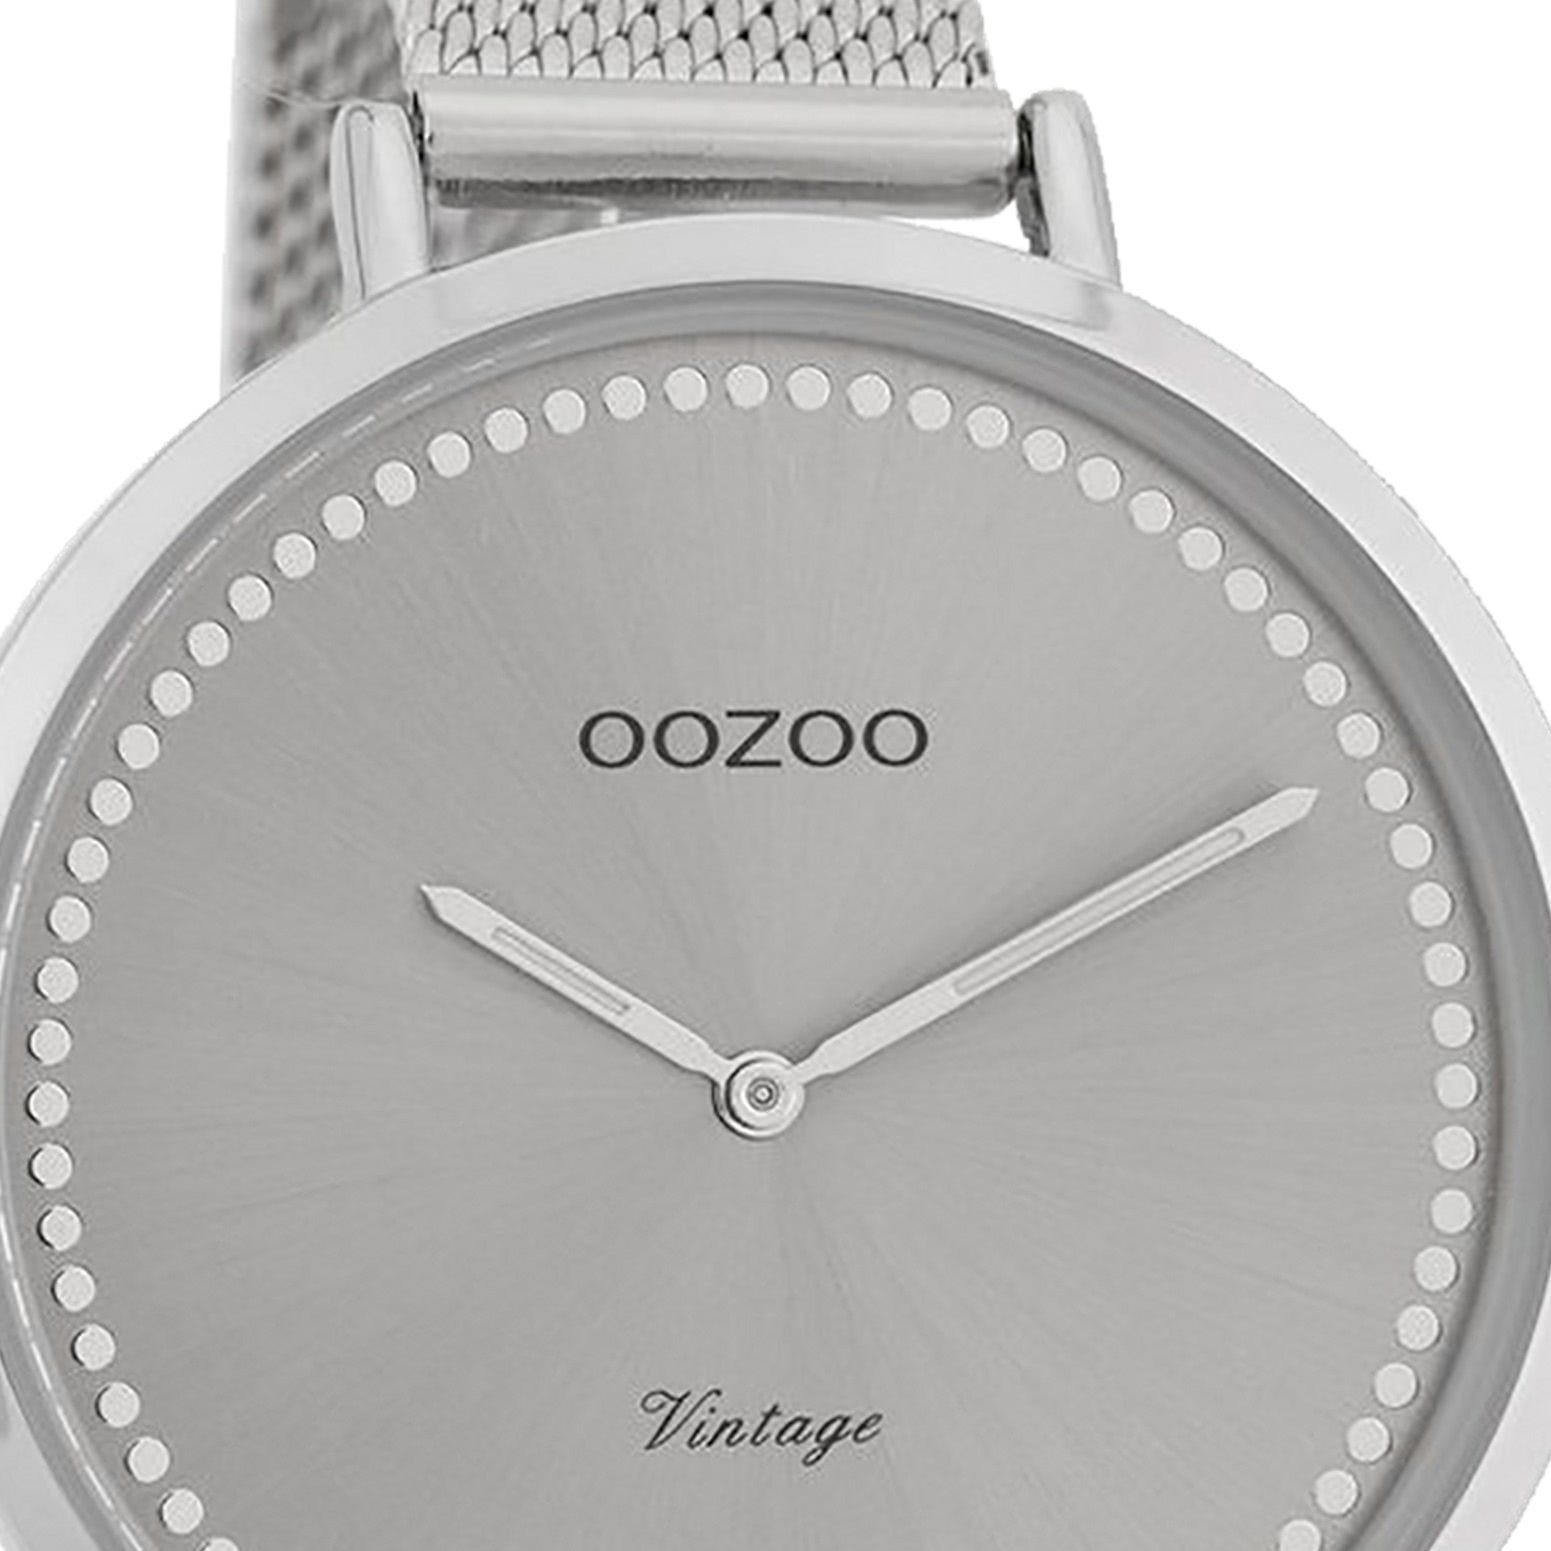 OOZOO Quarzuhr Oozoo Damen-Uhr silber, Edelstahlarmband, Damenuhr (ca. 40mm) groß rund, Fashion-Style